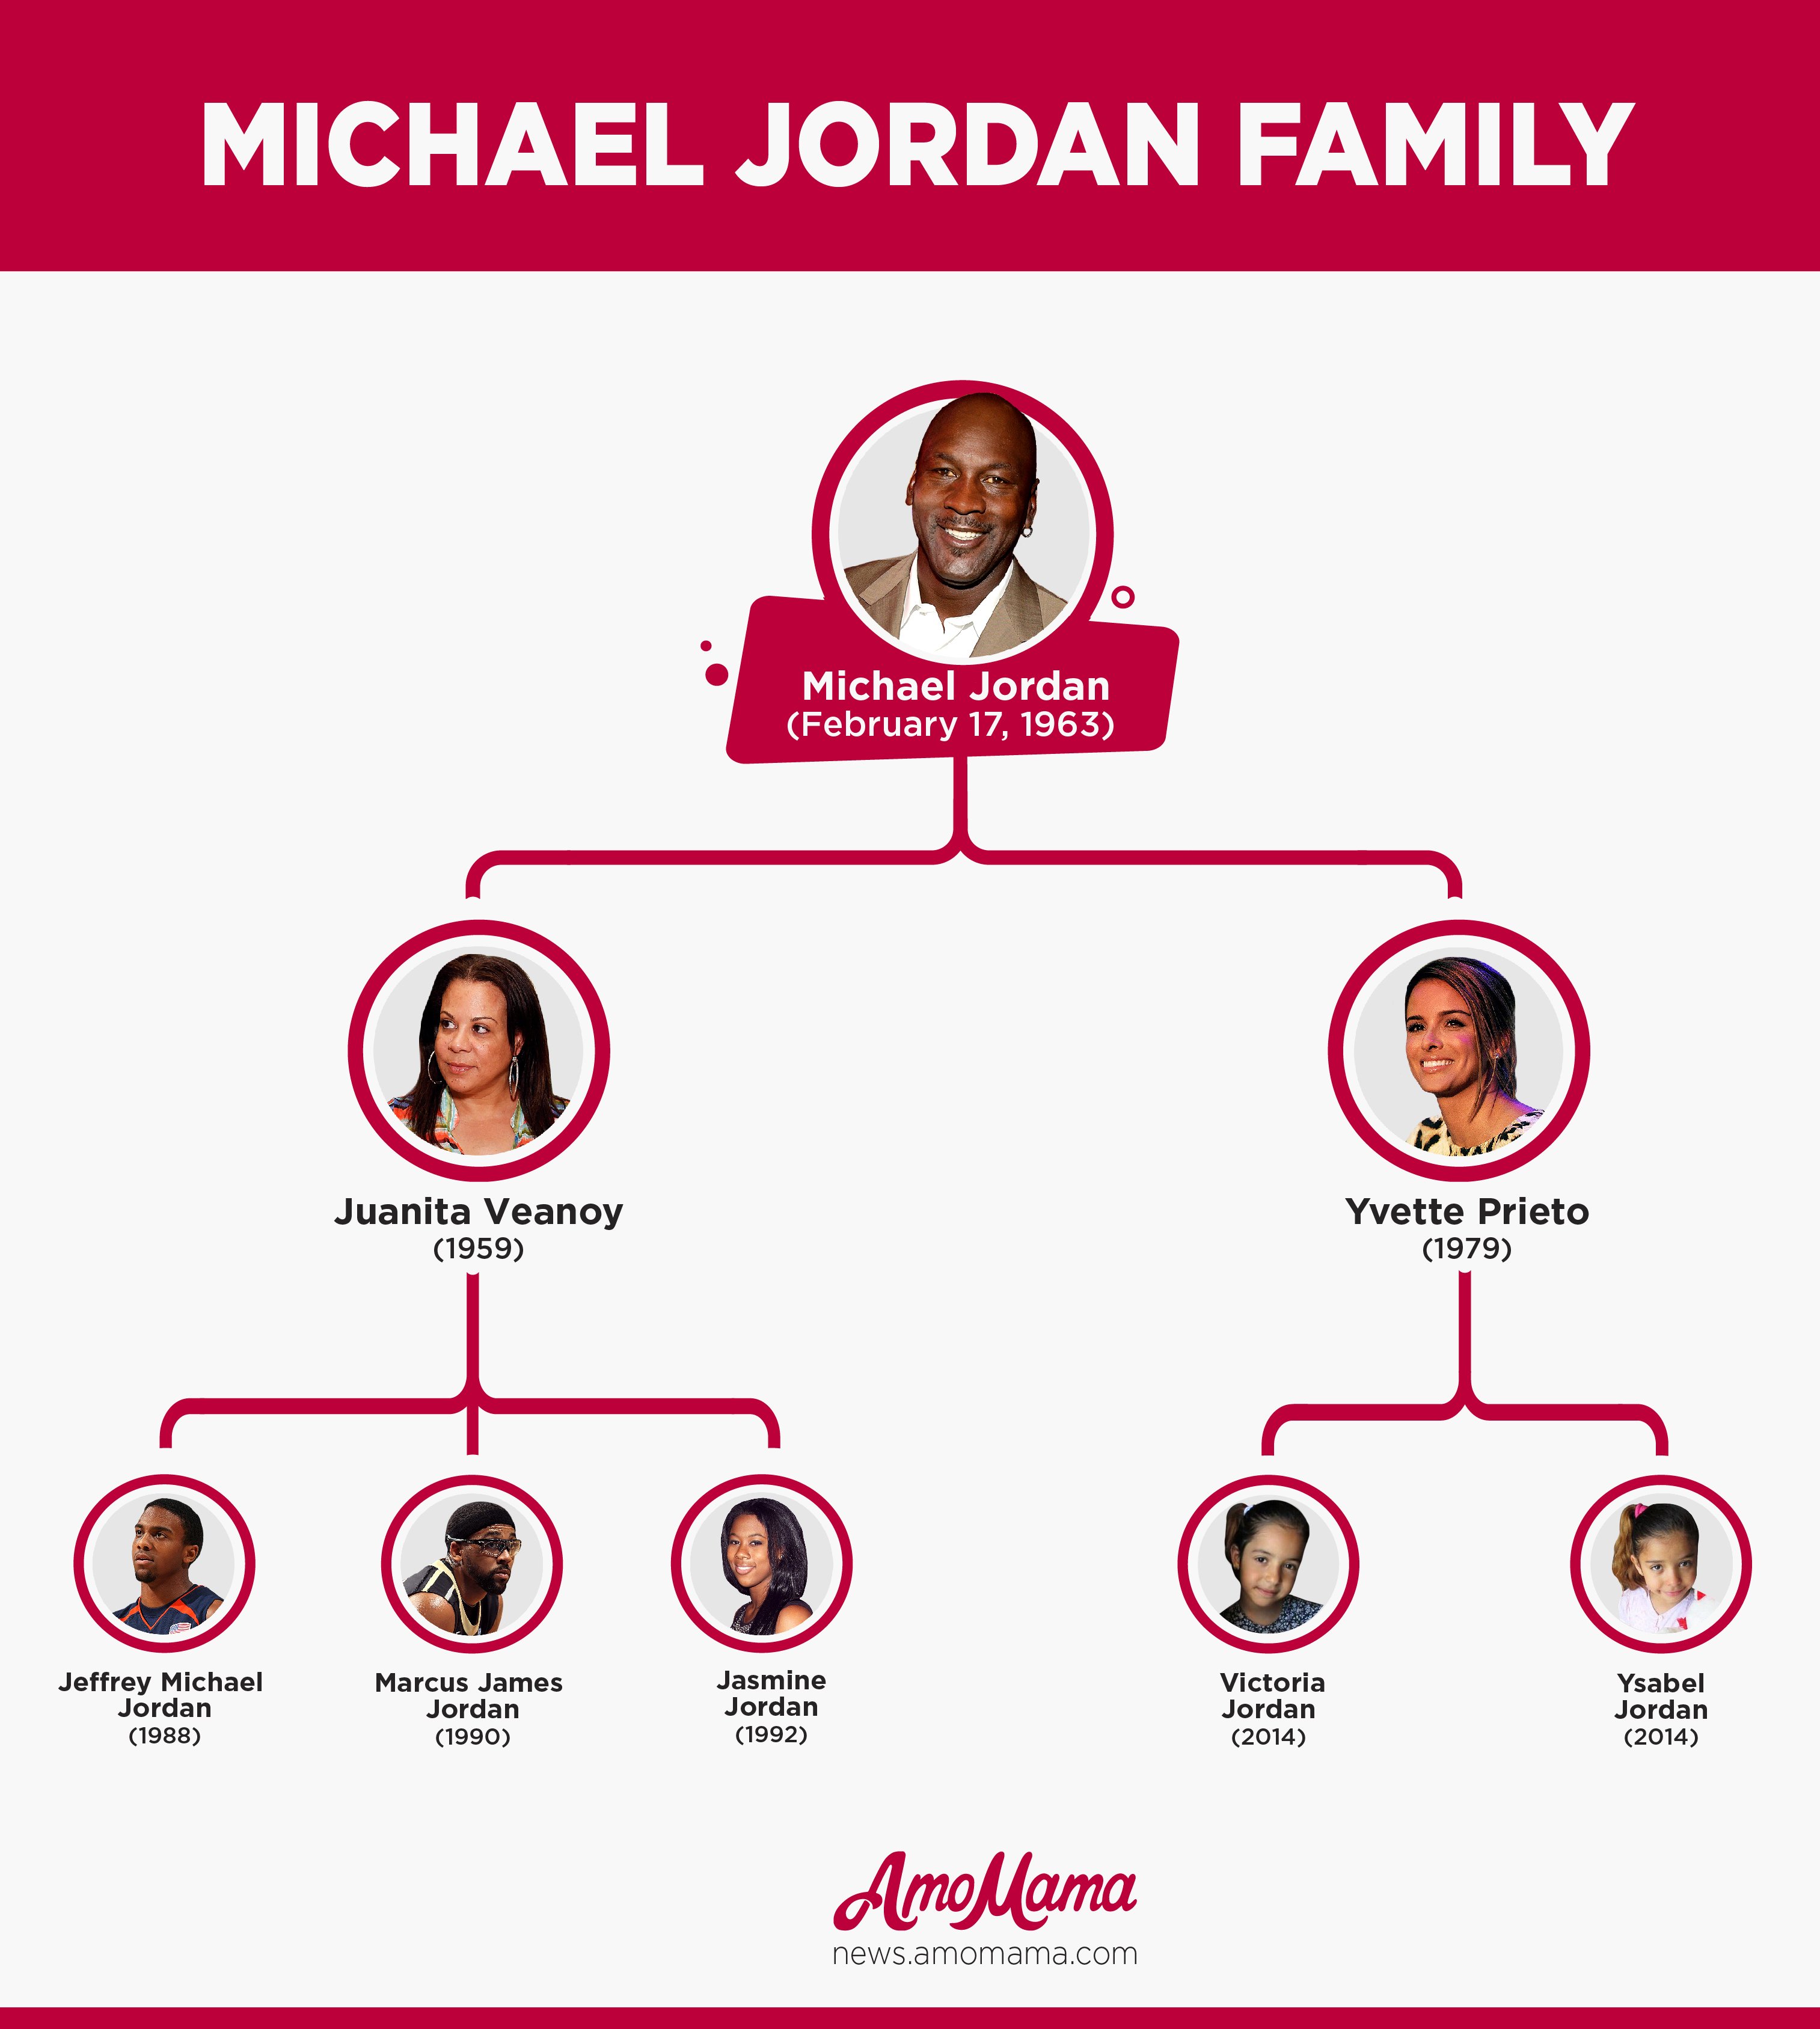 Michael Jordan Family Tree / Source: Amomama